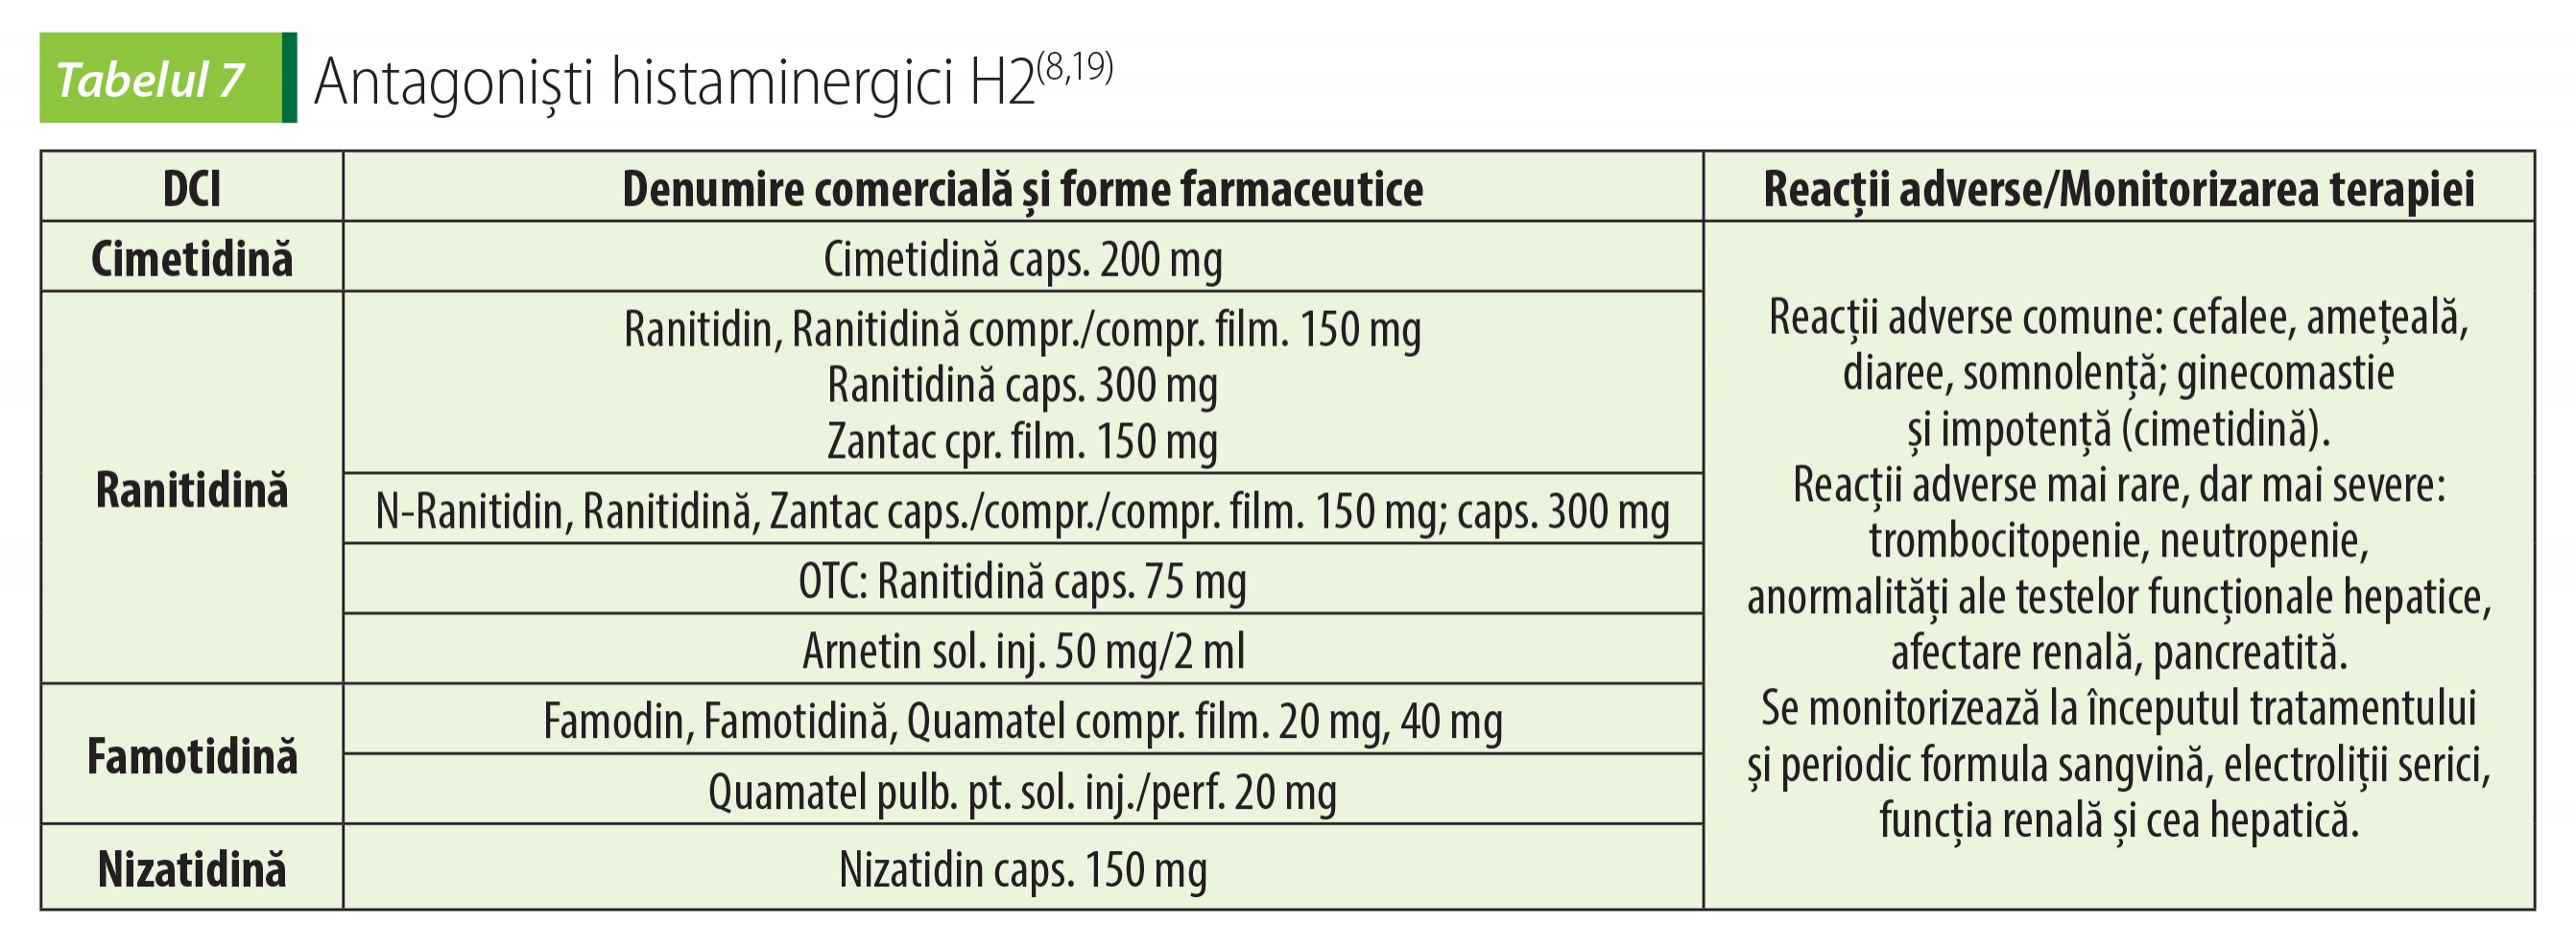 Tabelul 7 Antagoniști histaminergici H2(8,19)